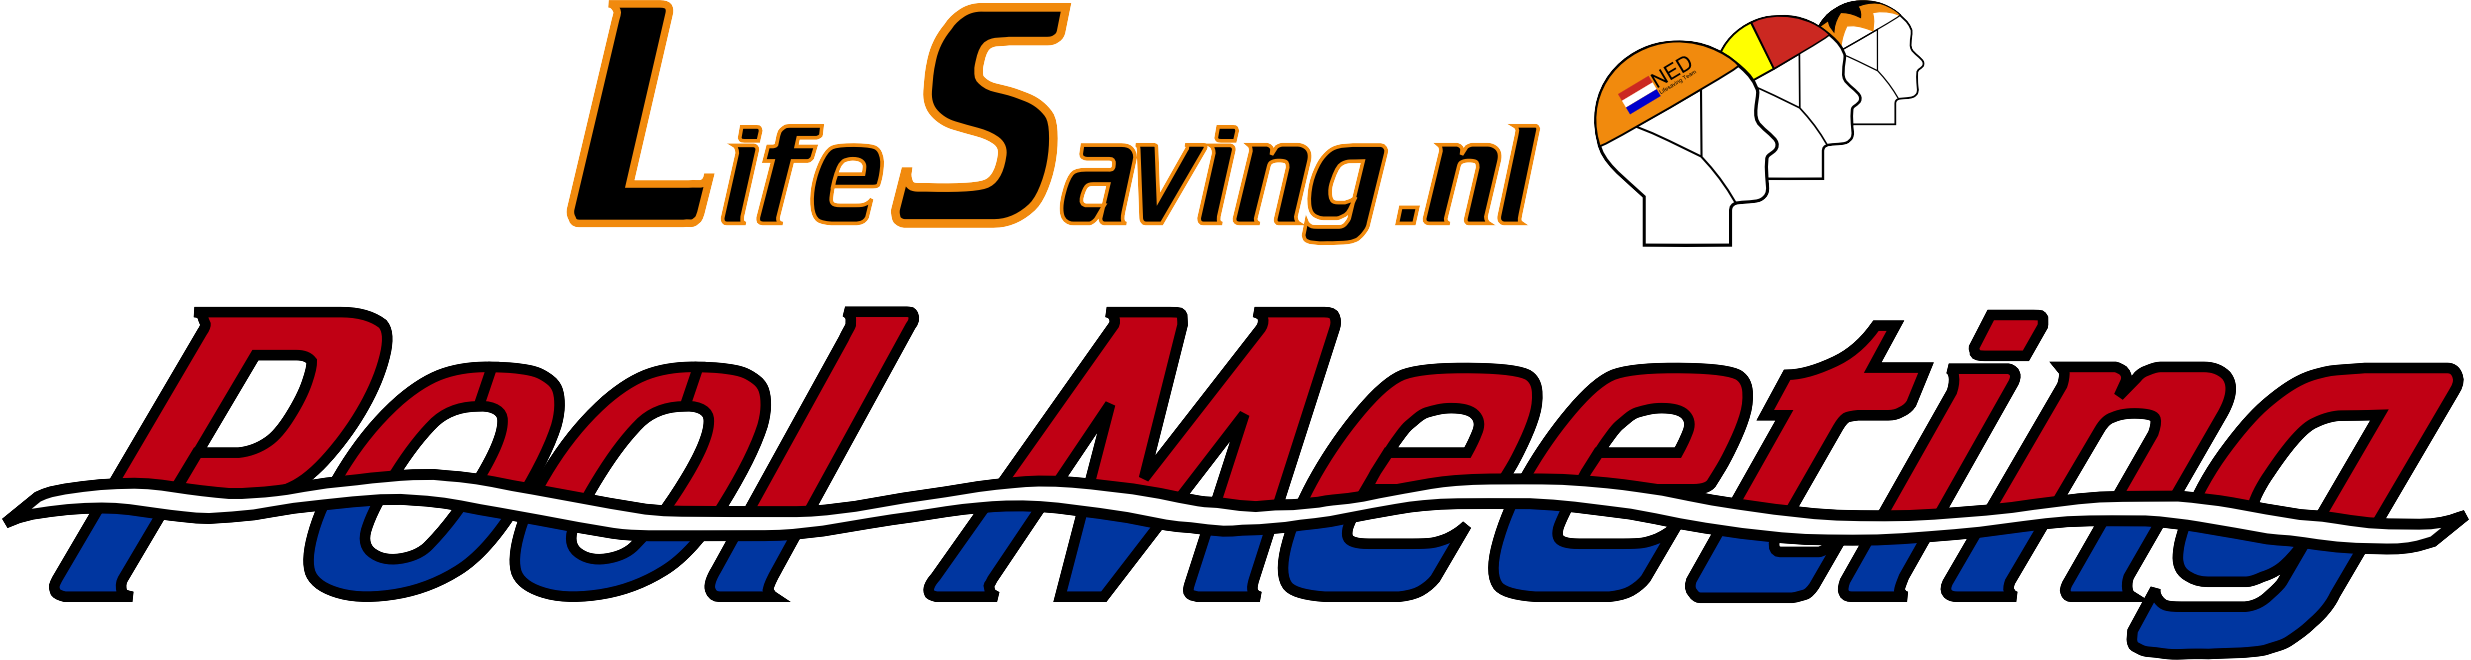 lifesaving.nl_pool-meeting